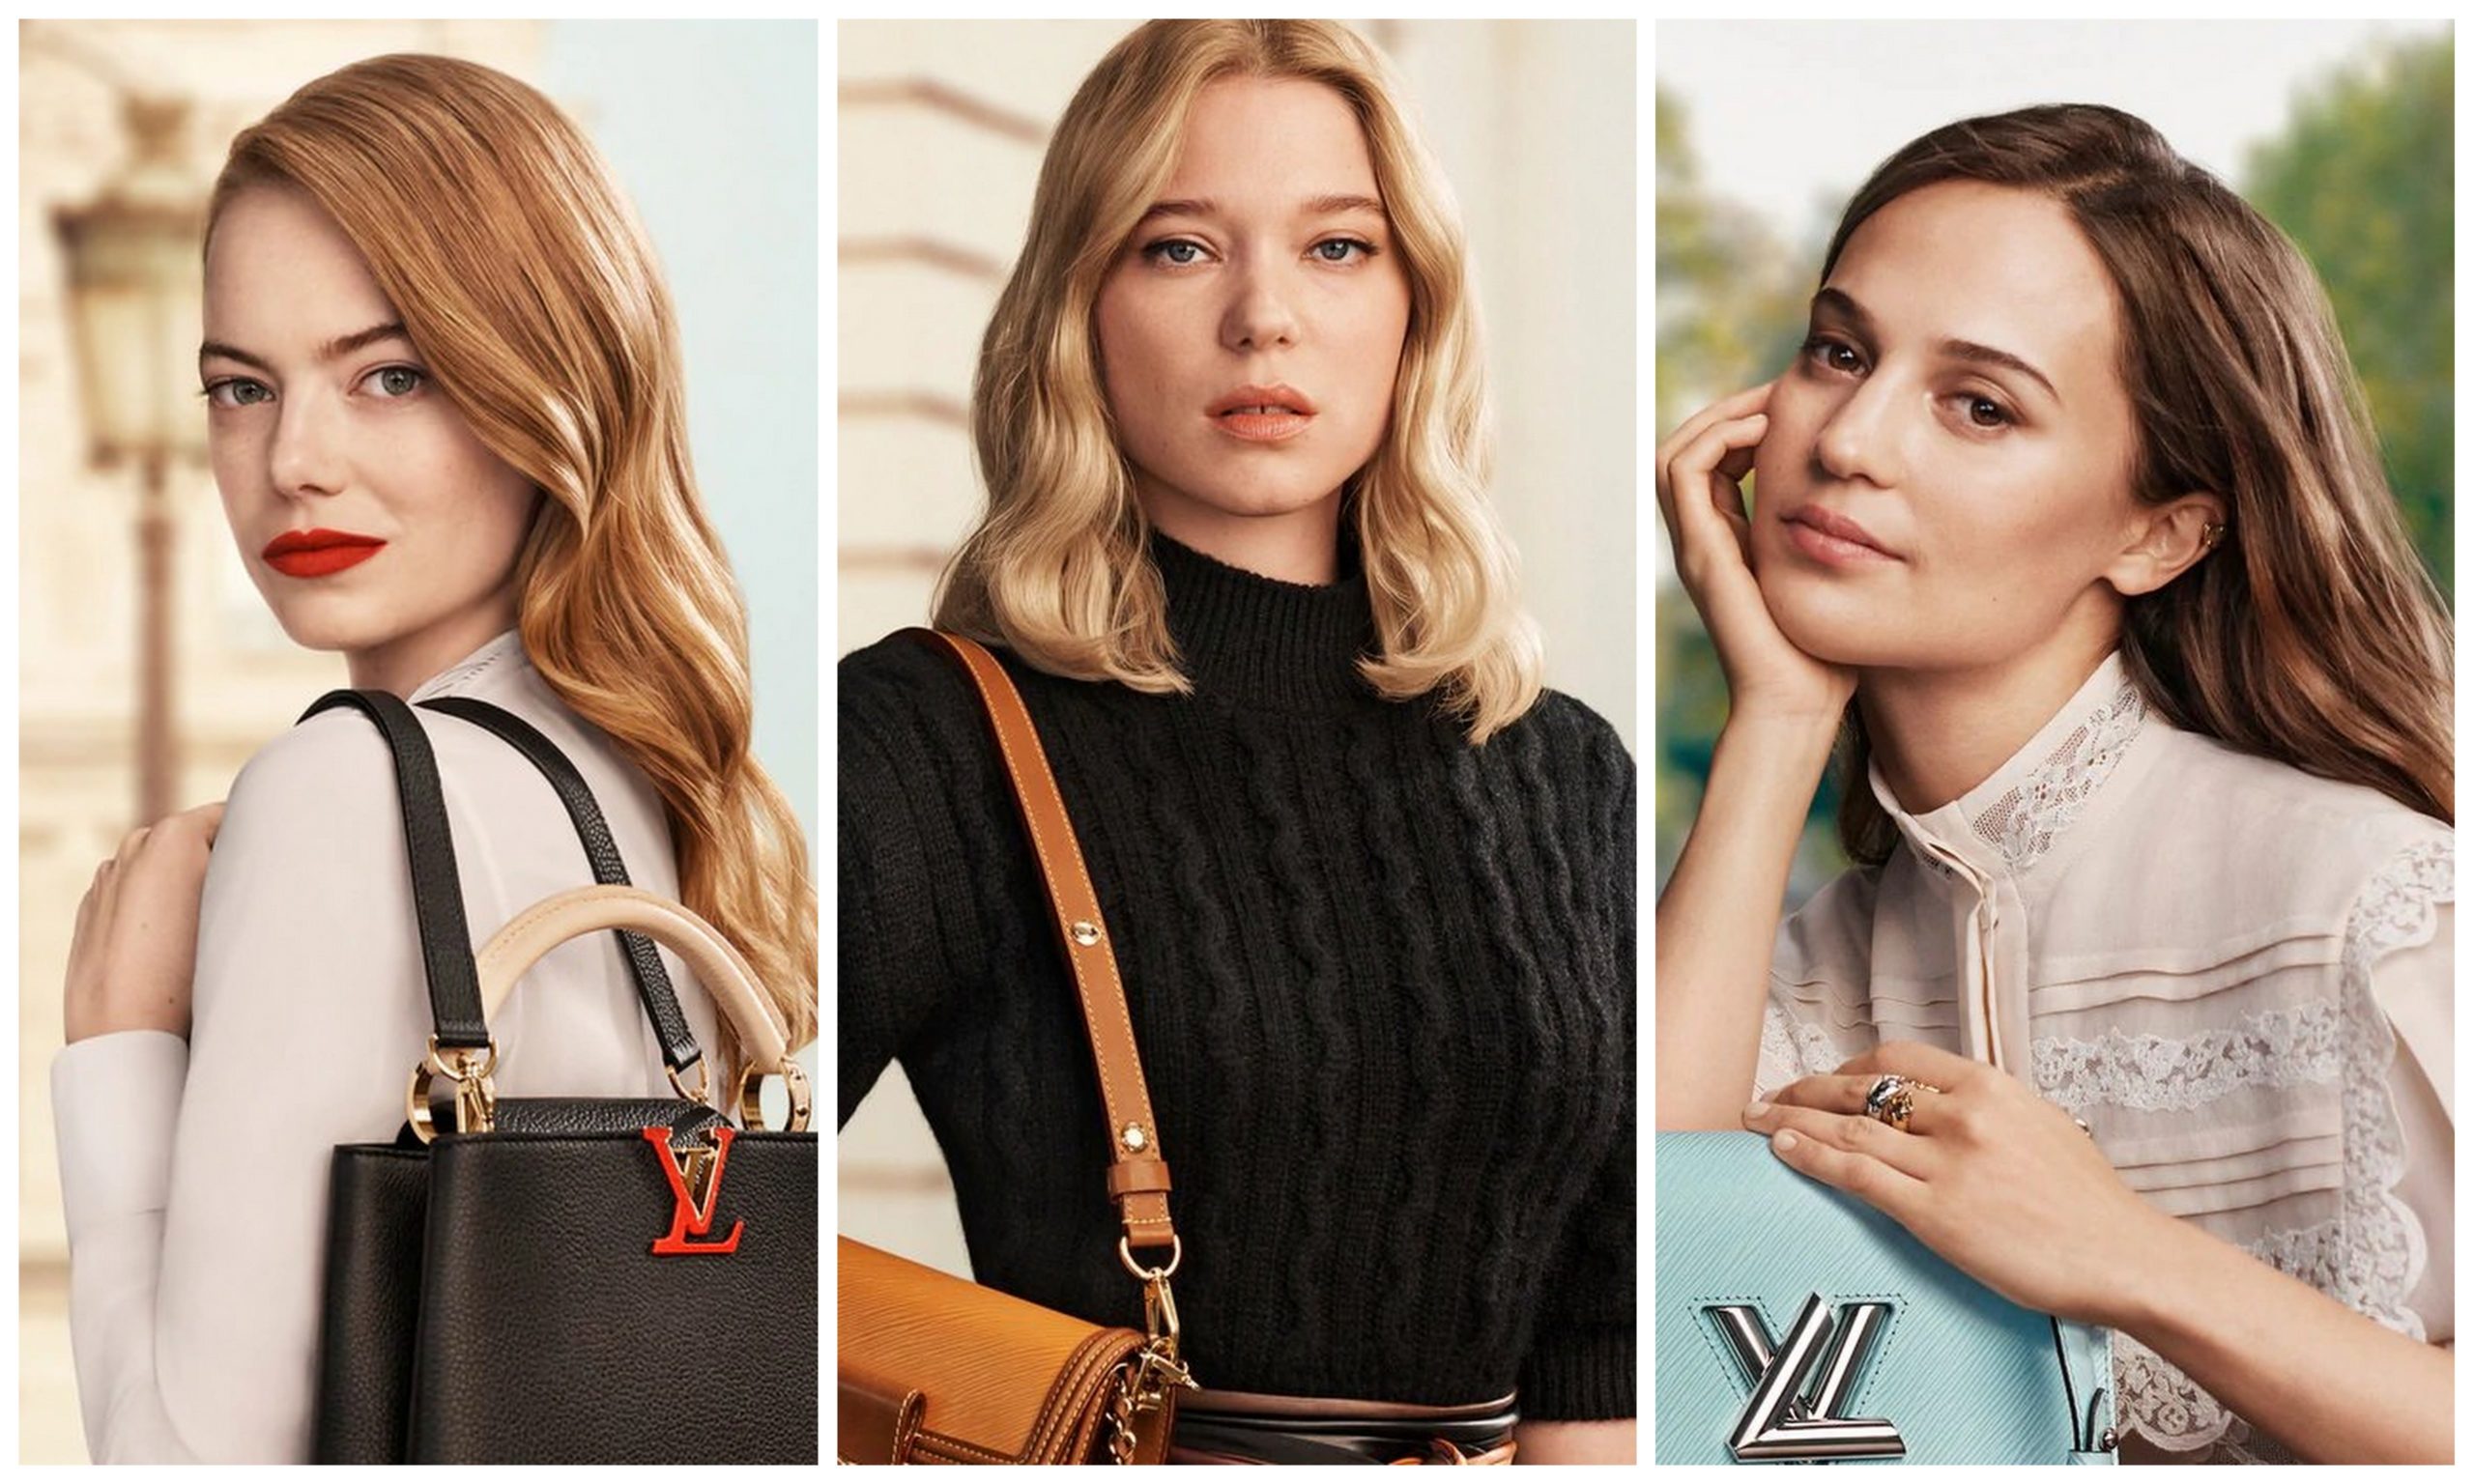 Emma Stone, Léa Seydoux, and Alicia Vikander for Louis Vuitton's